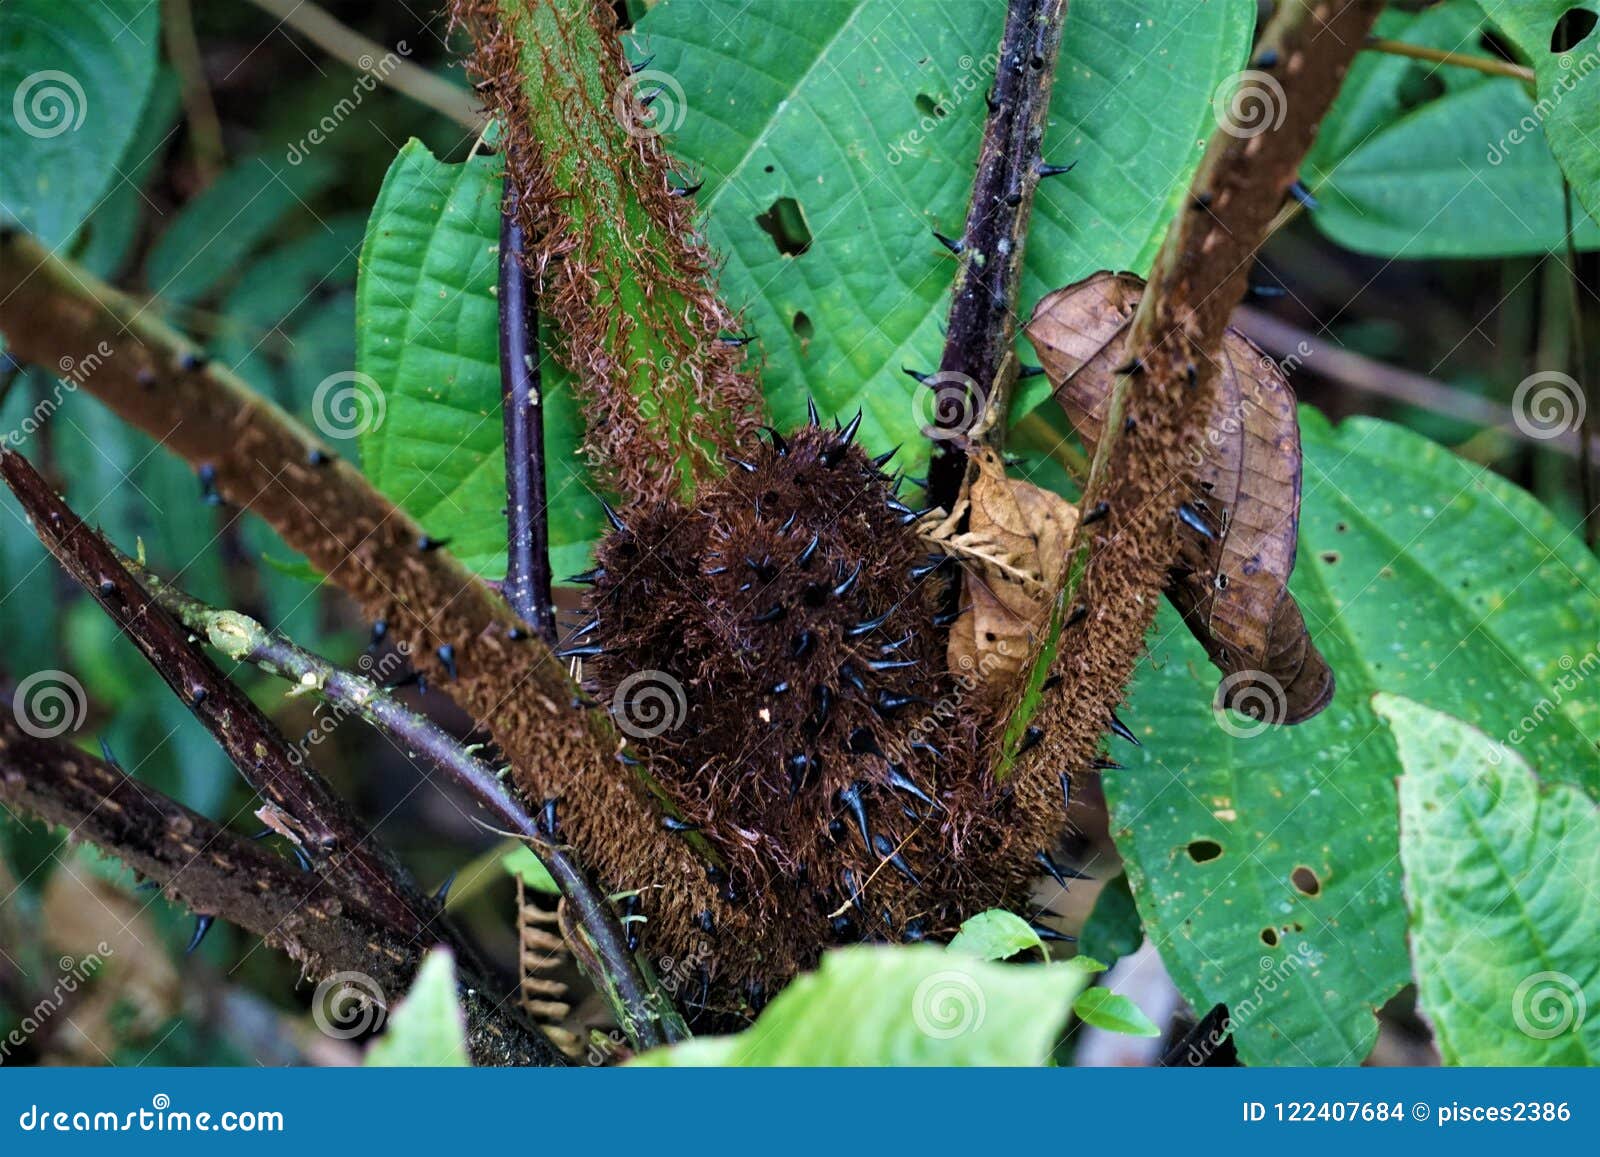 cyatheales with black spines growing in las quebradas